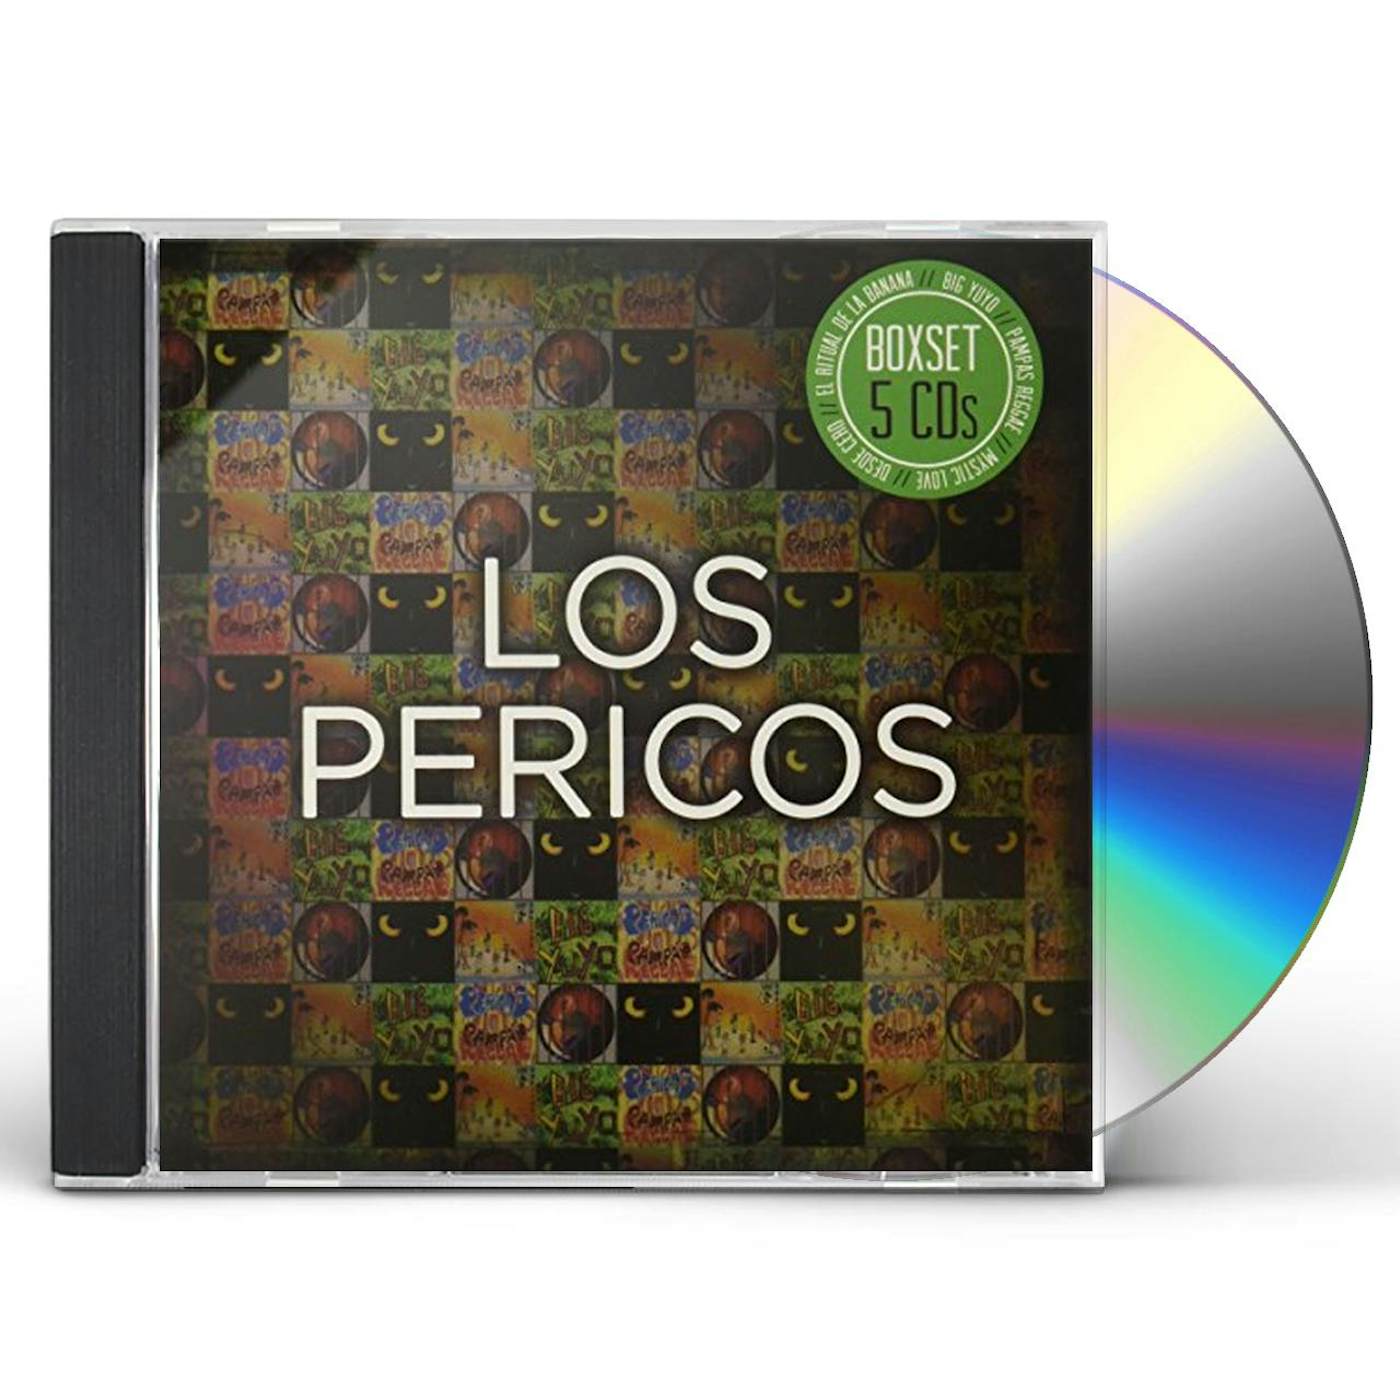 Los Pericos BOXSET 5 CDS CD